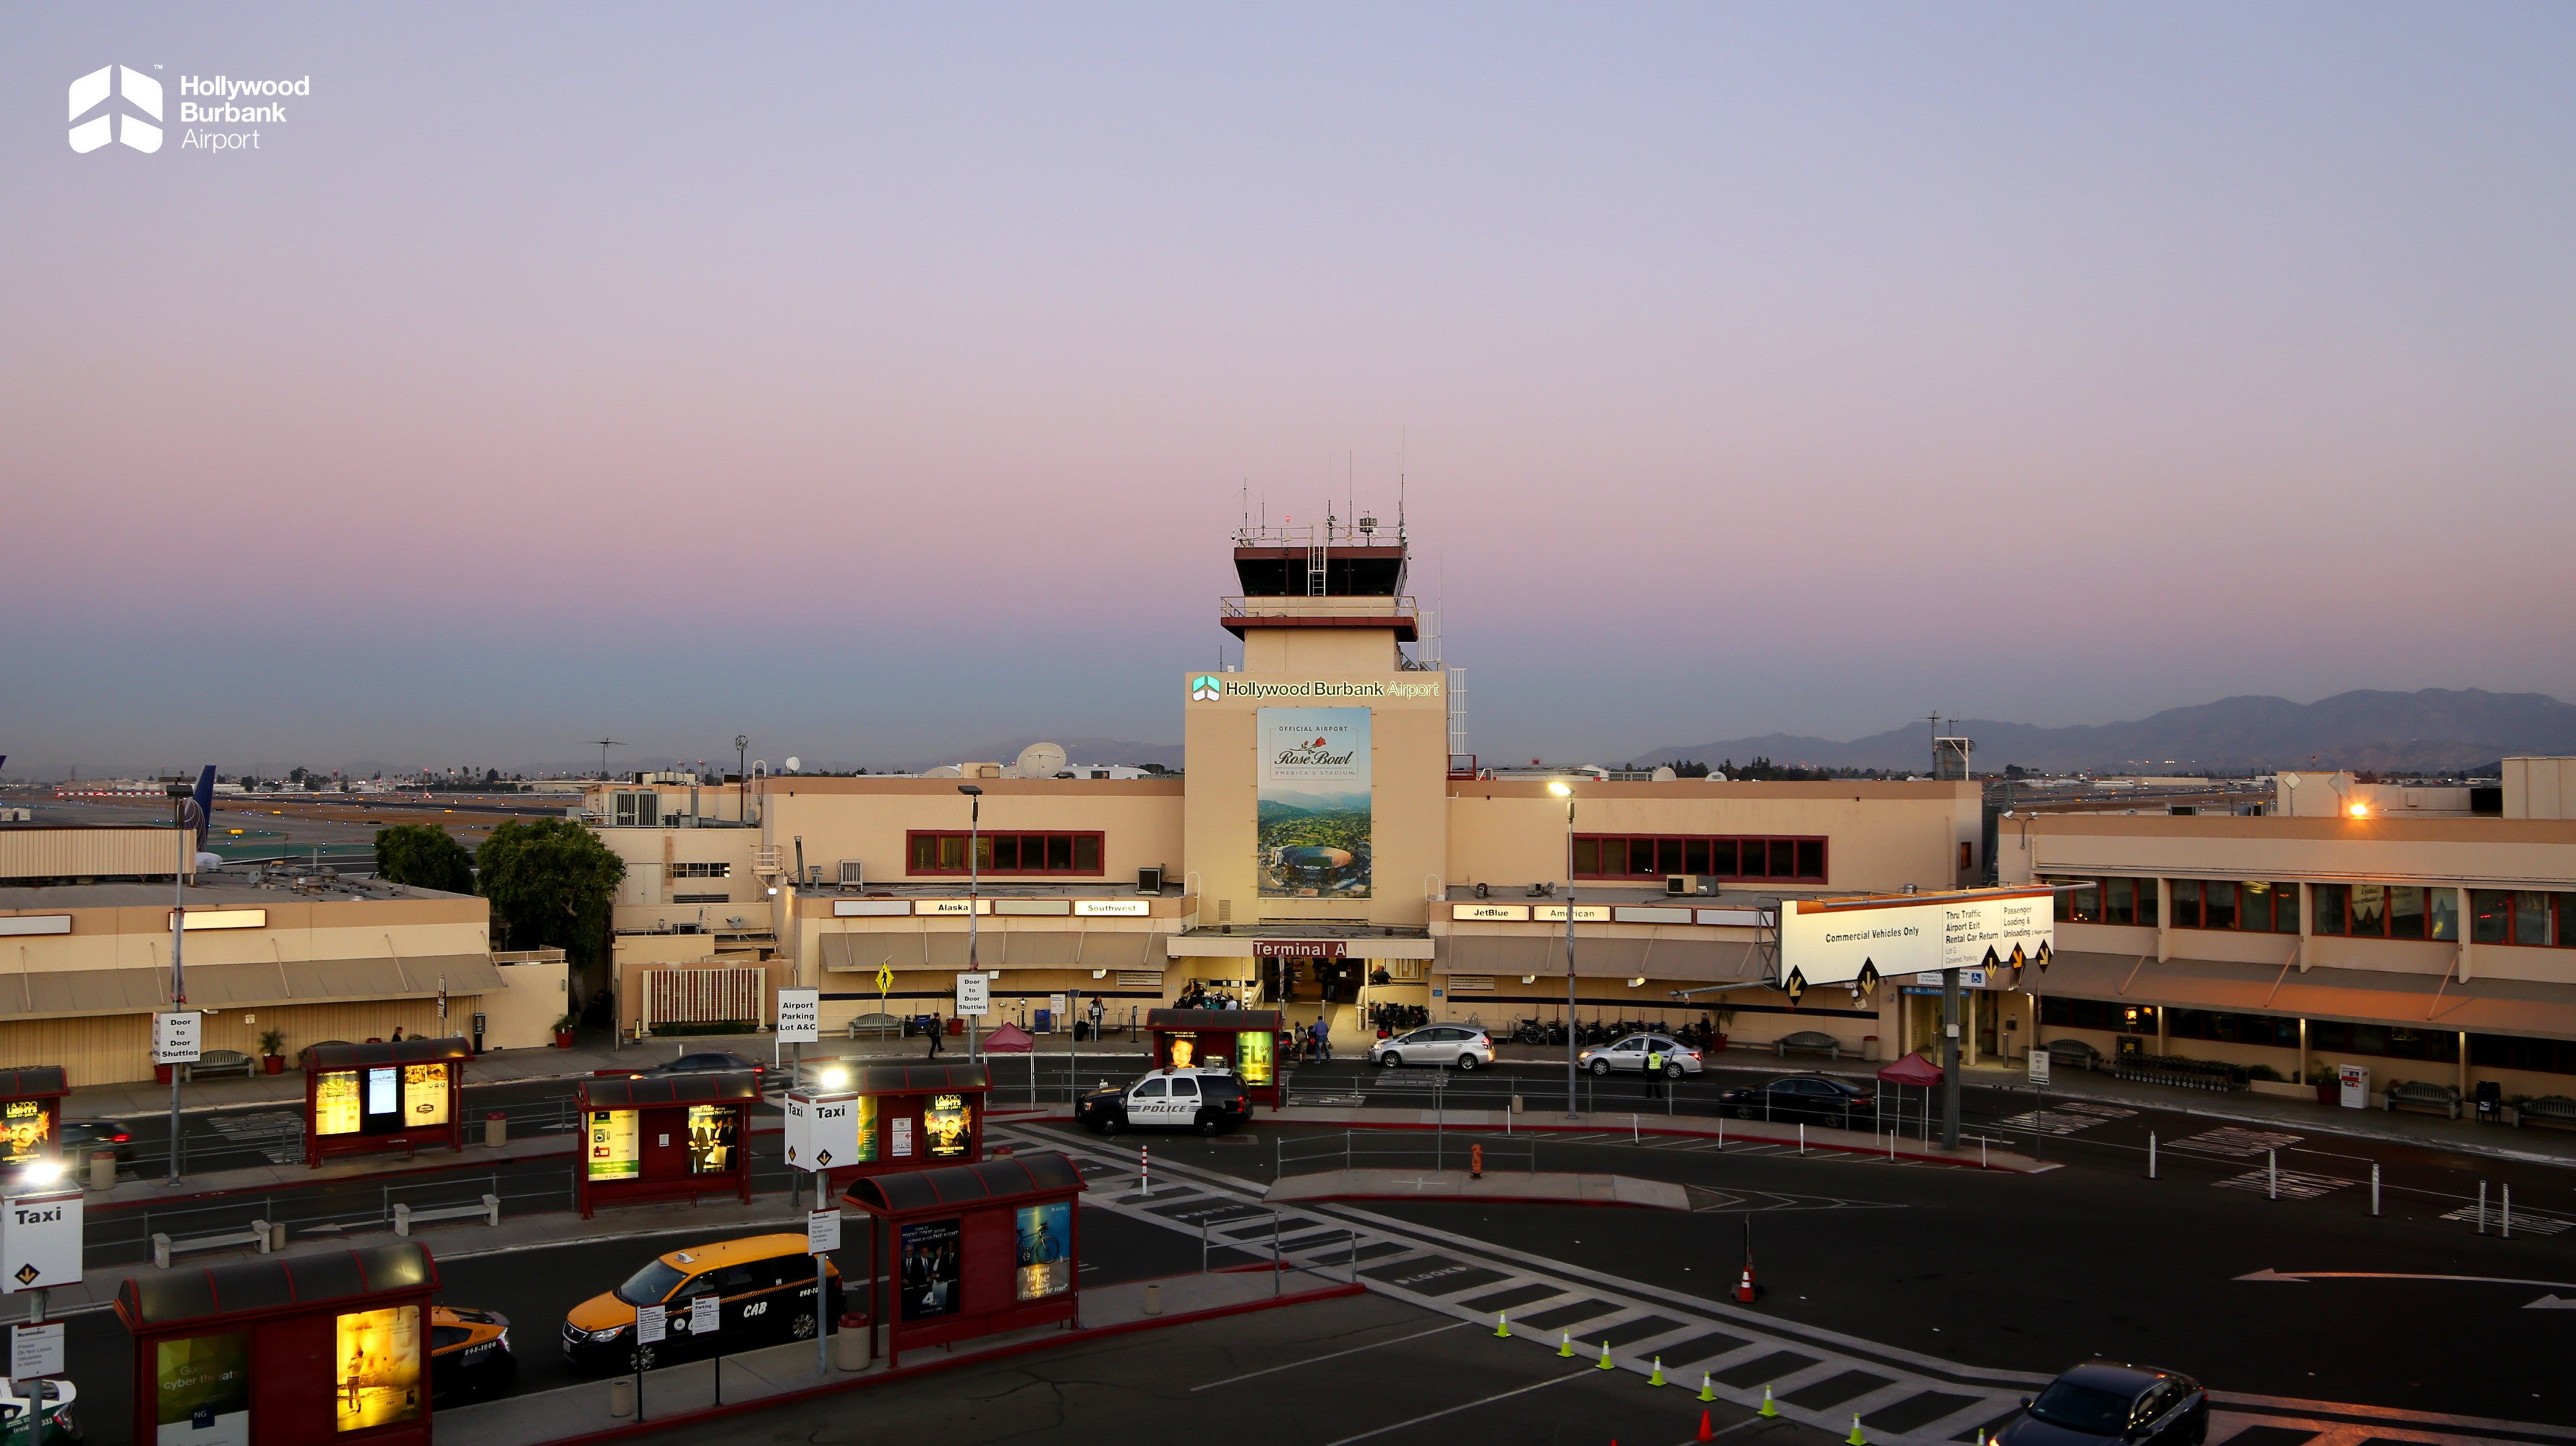 Hollywood Burbank Airport (BUR) | Discover Los Angeles